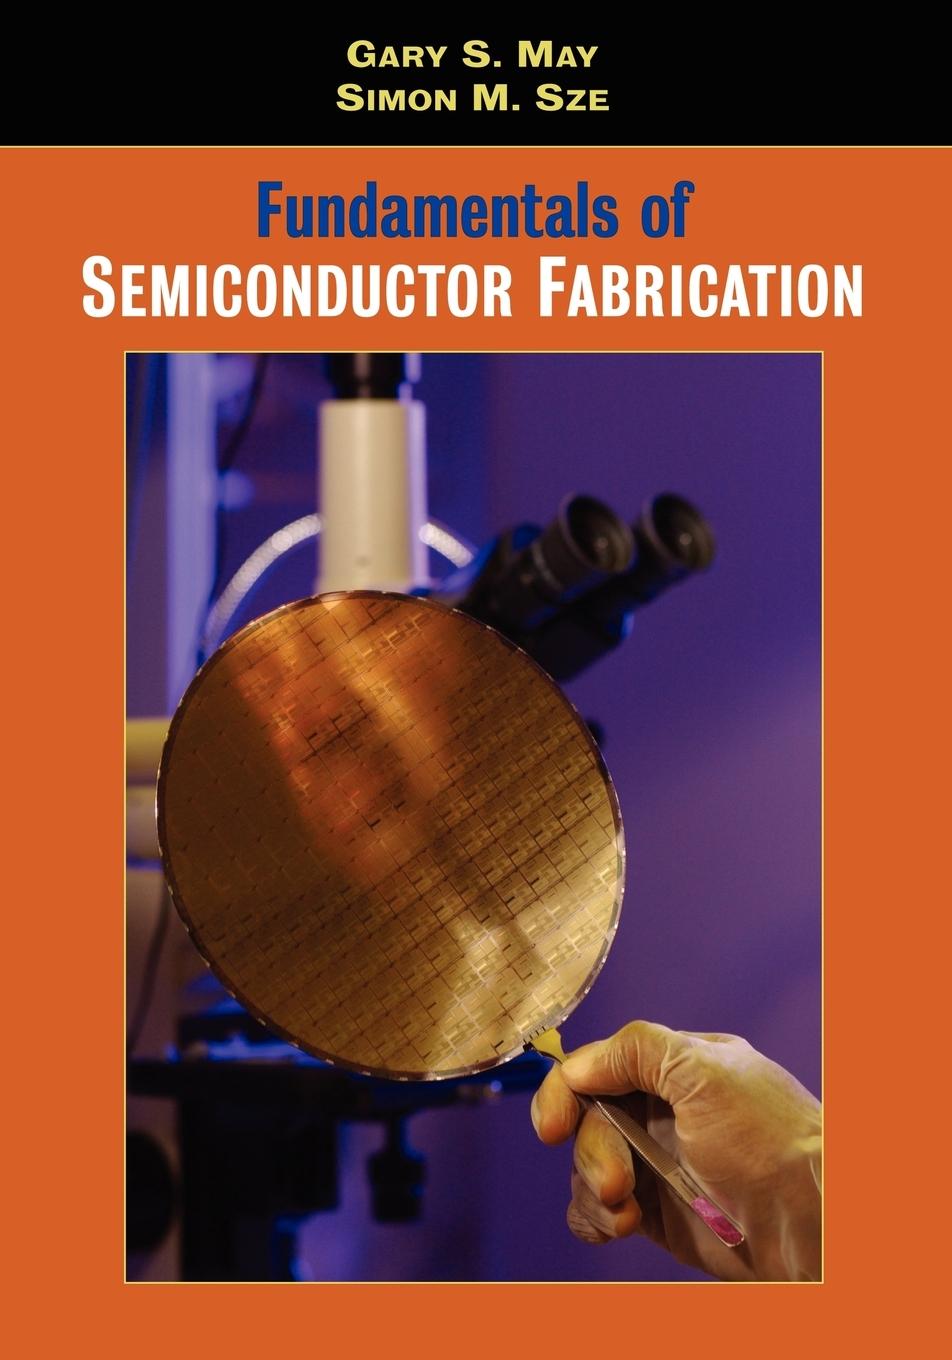 Fundamentals of Semiconductor Fabrication - Gary S. May|Simon M. Sze